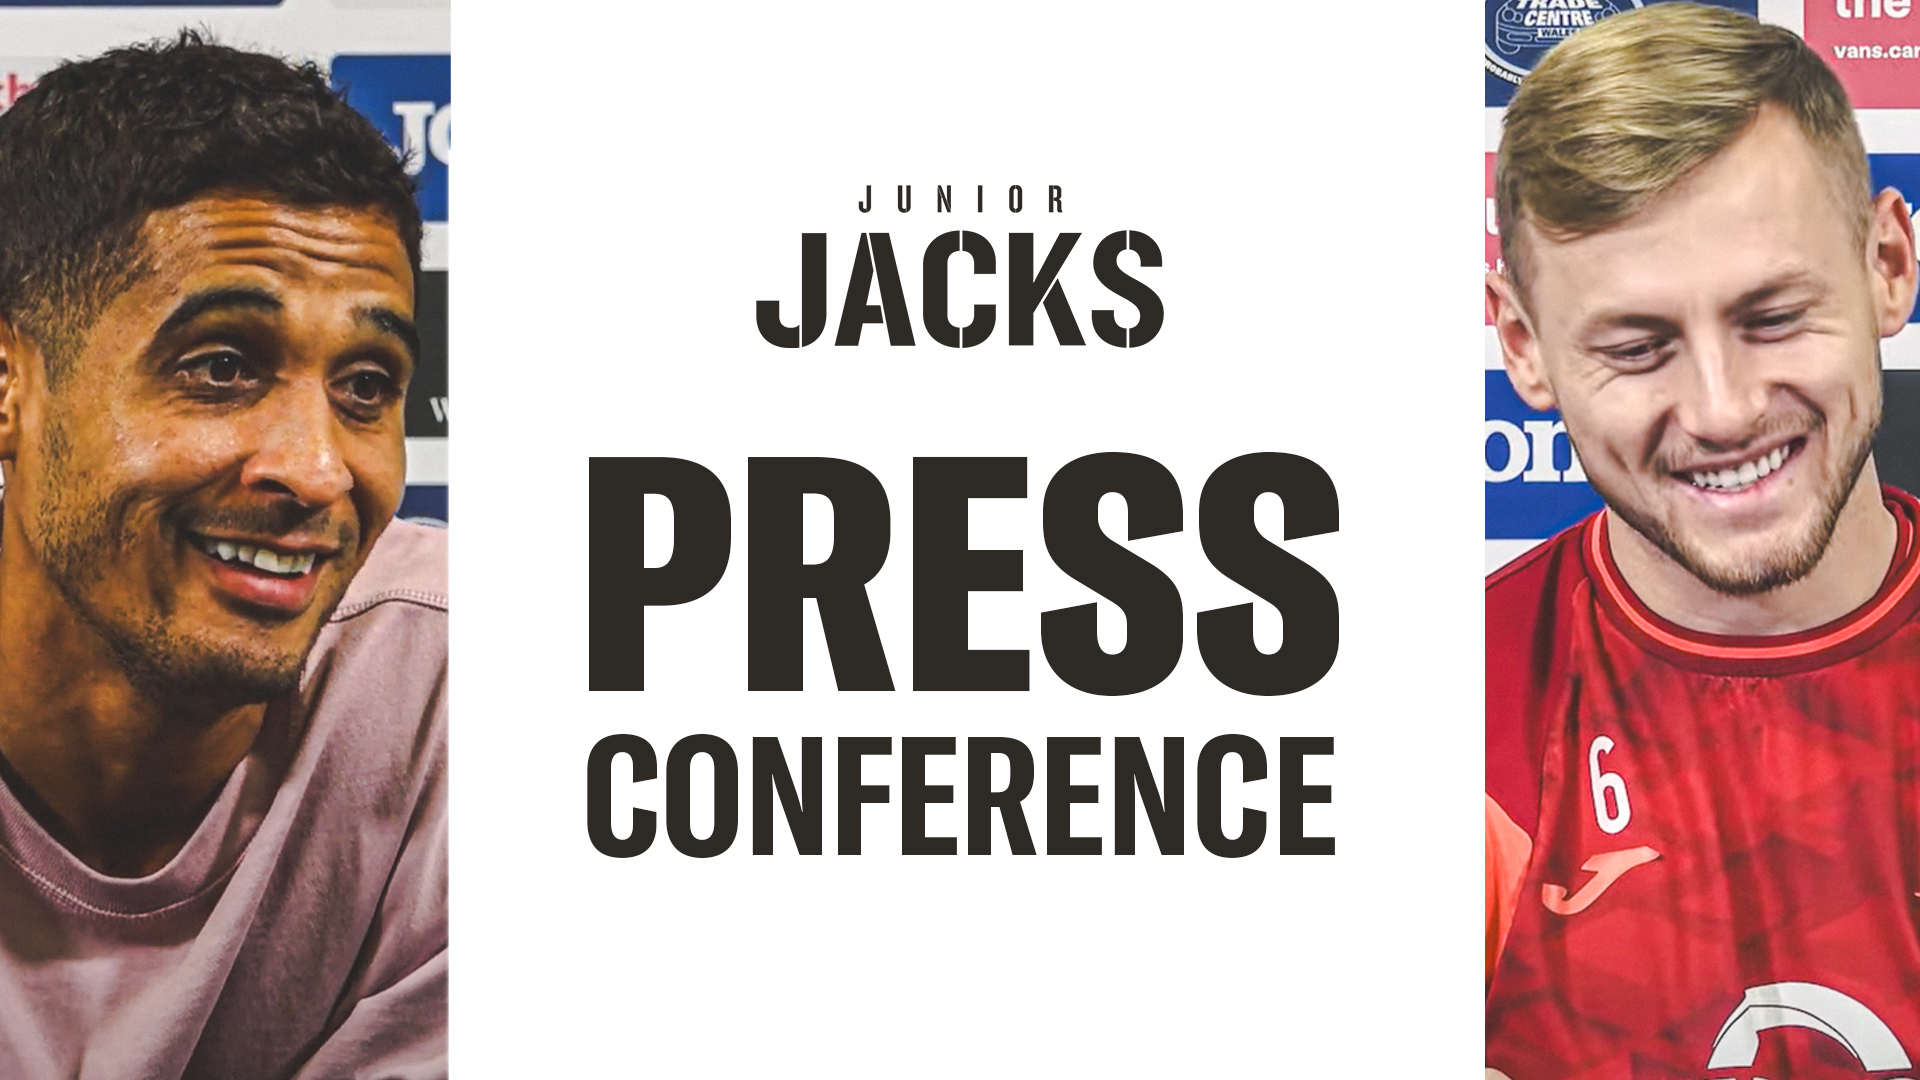 Junior Jacks press conference